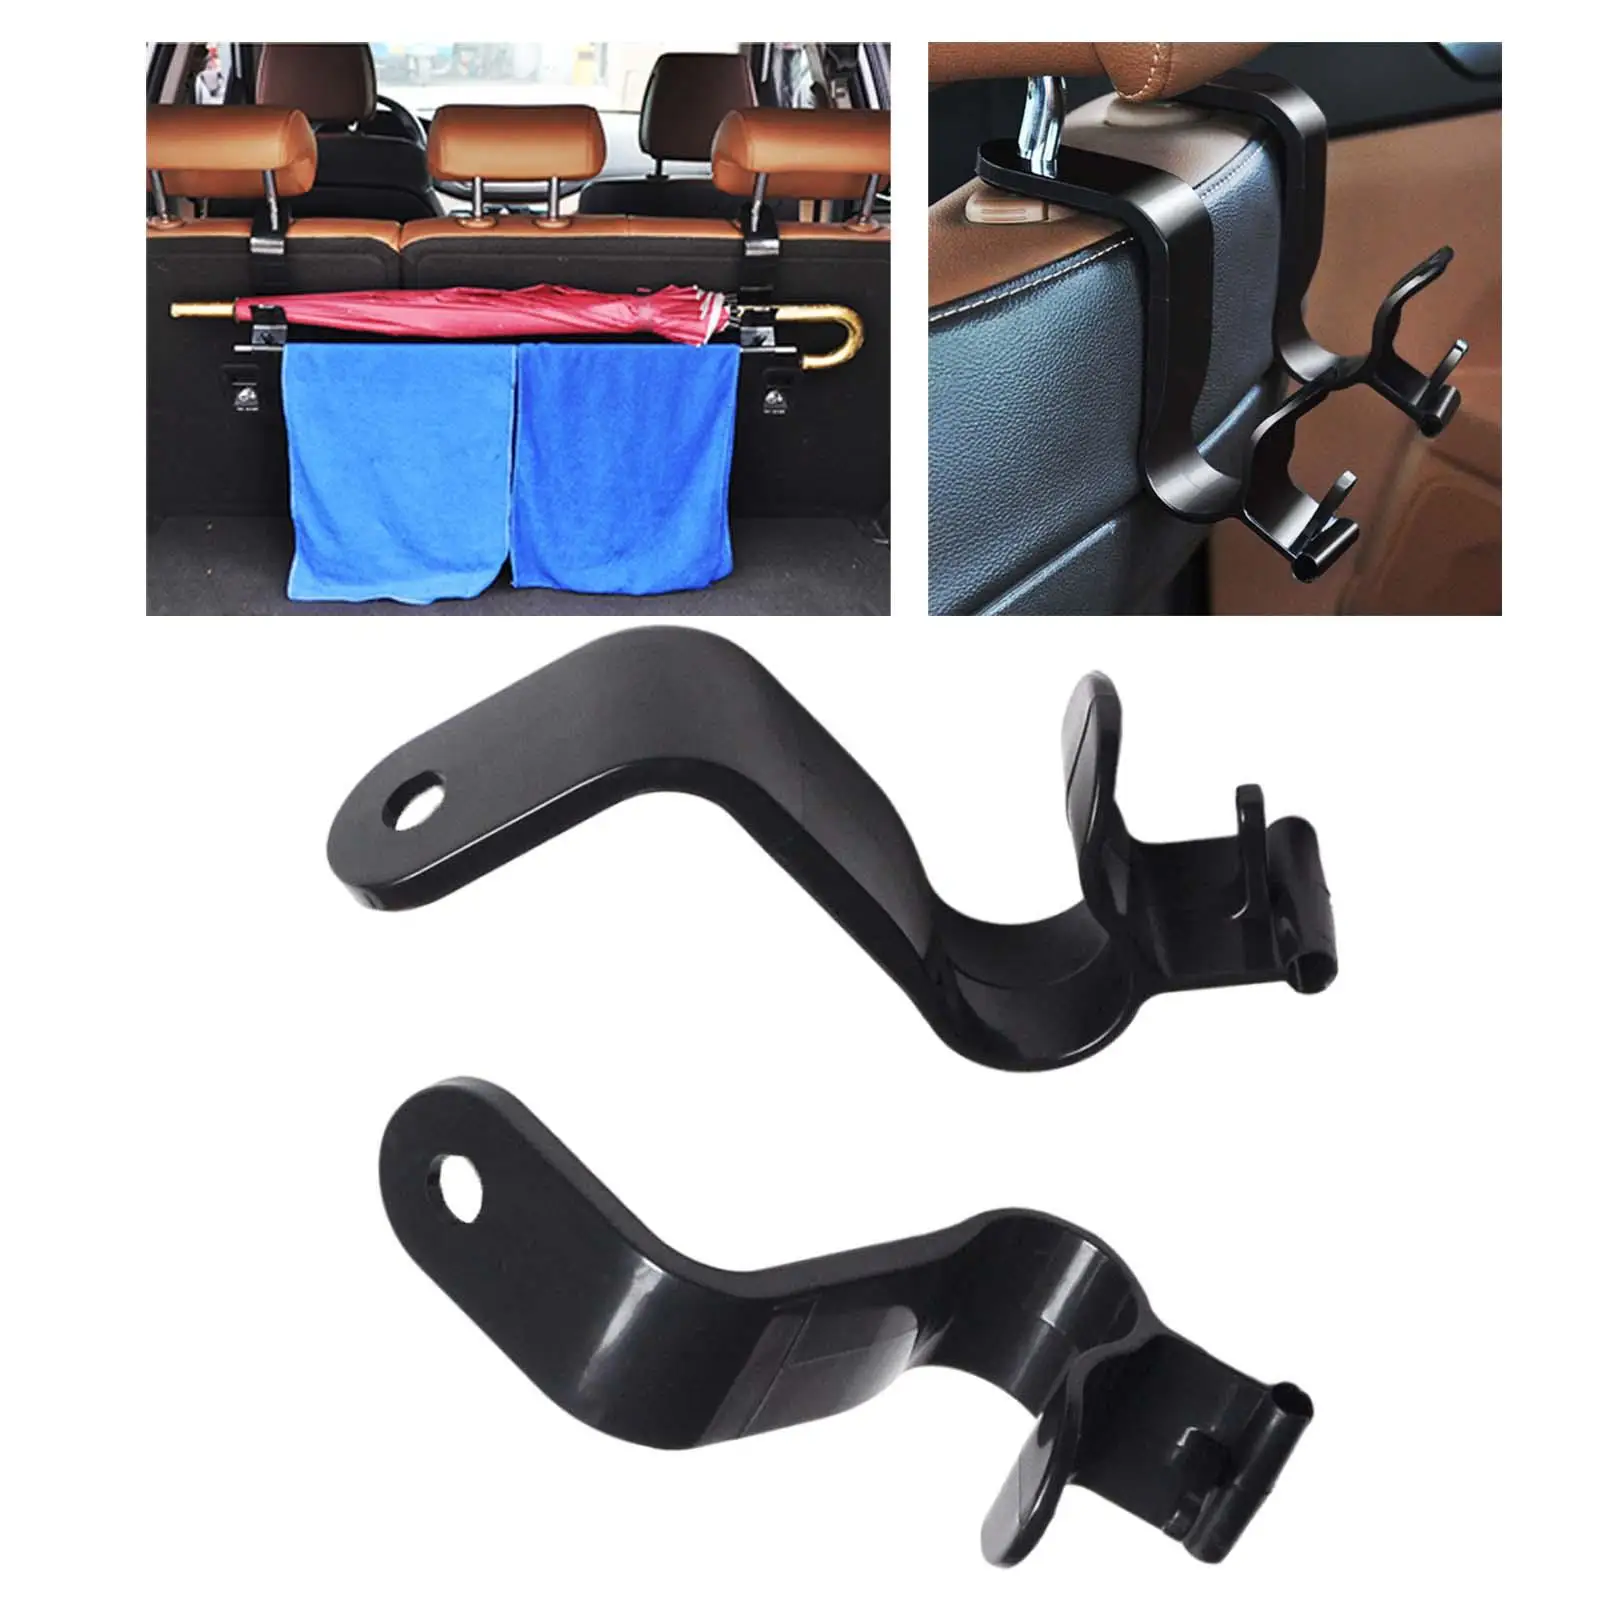 2x Car Seat Headrest Hangers Hook Replace Grocery Bag Umbrella Hanger Towel Hooks 20kg Load Storage Organizer Interior Holder